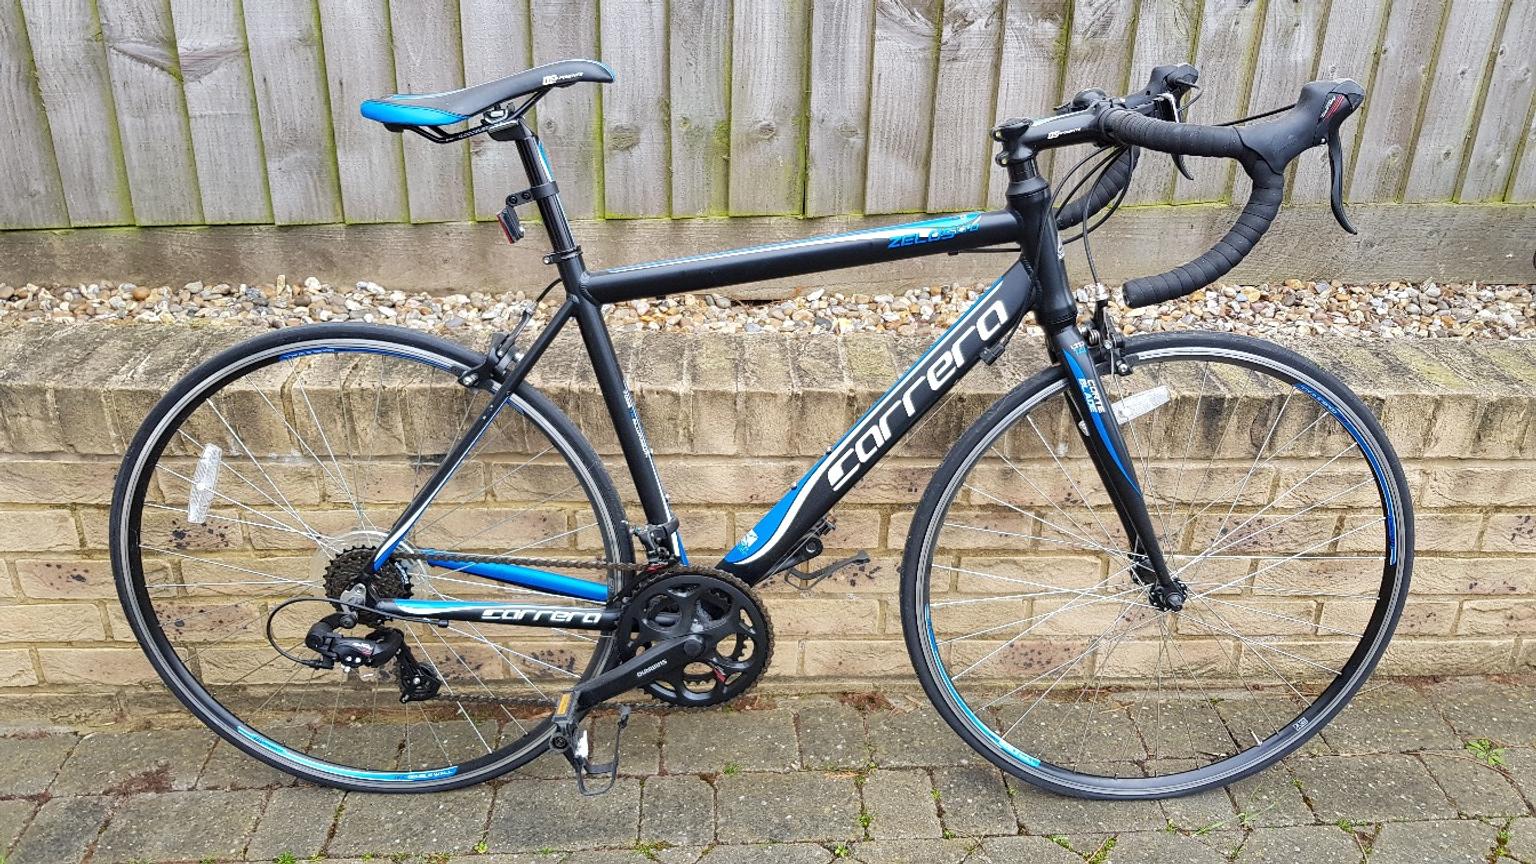 Carrera Zelos Ltd Road Bike In Aylesbury Vale For 100 00 For Sale